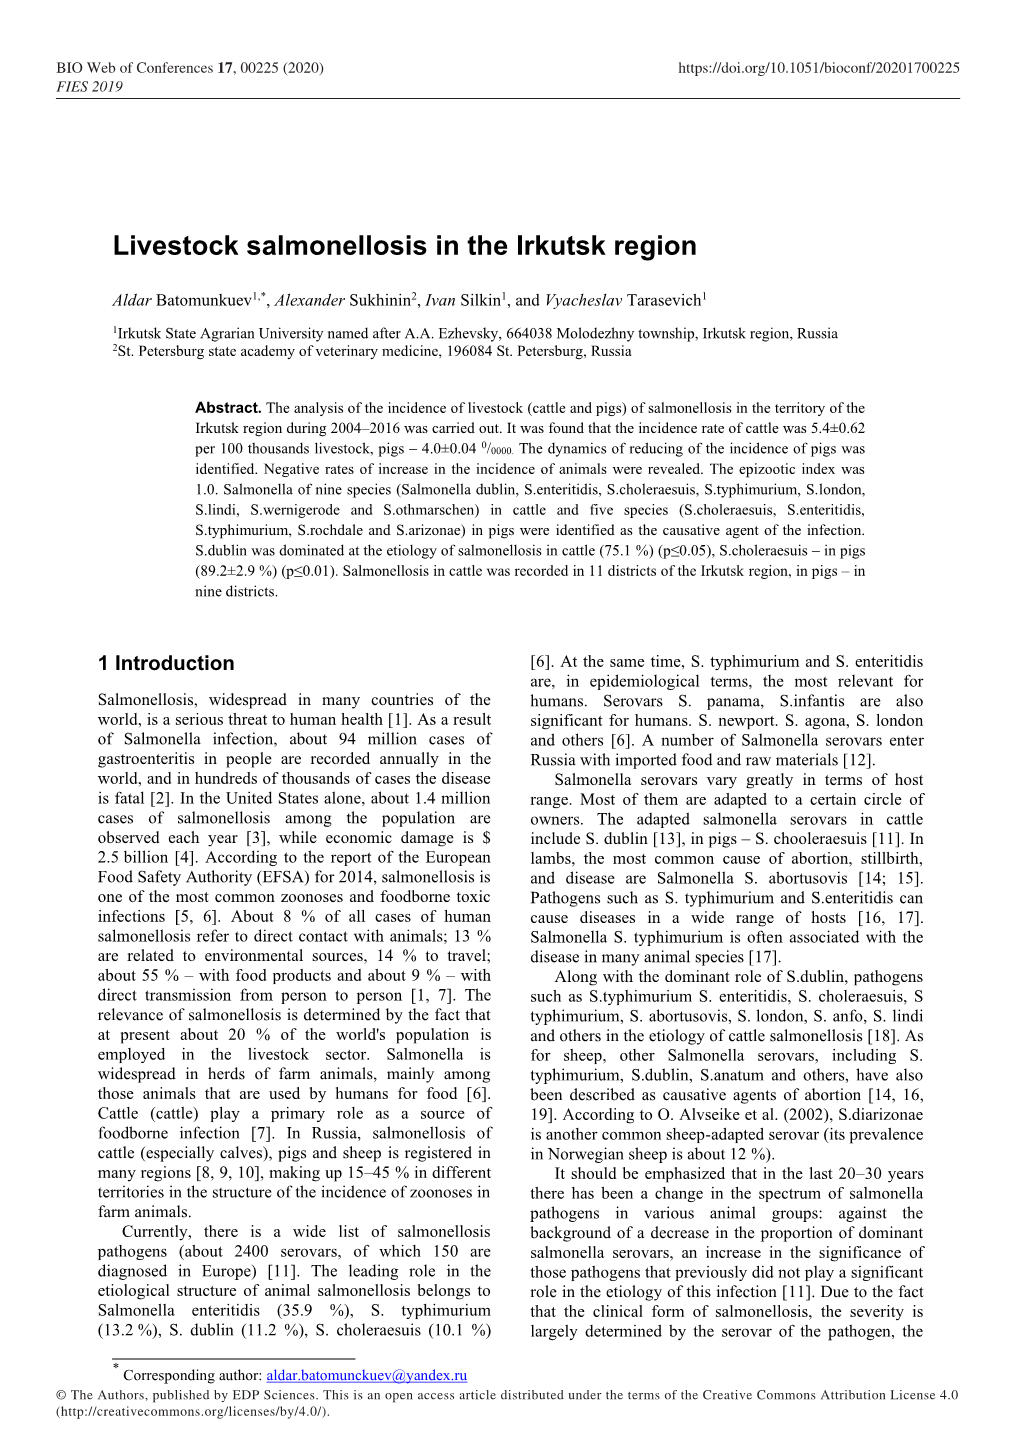 Livestock Salmonellosis in the Irkutsk Region